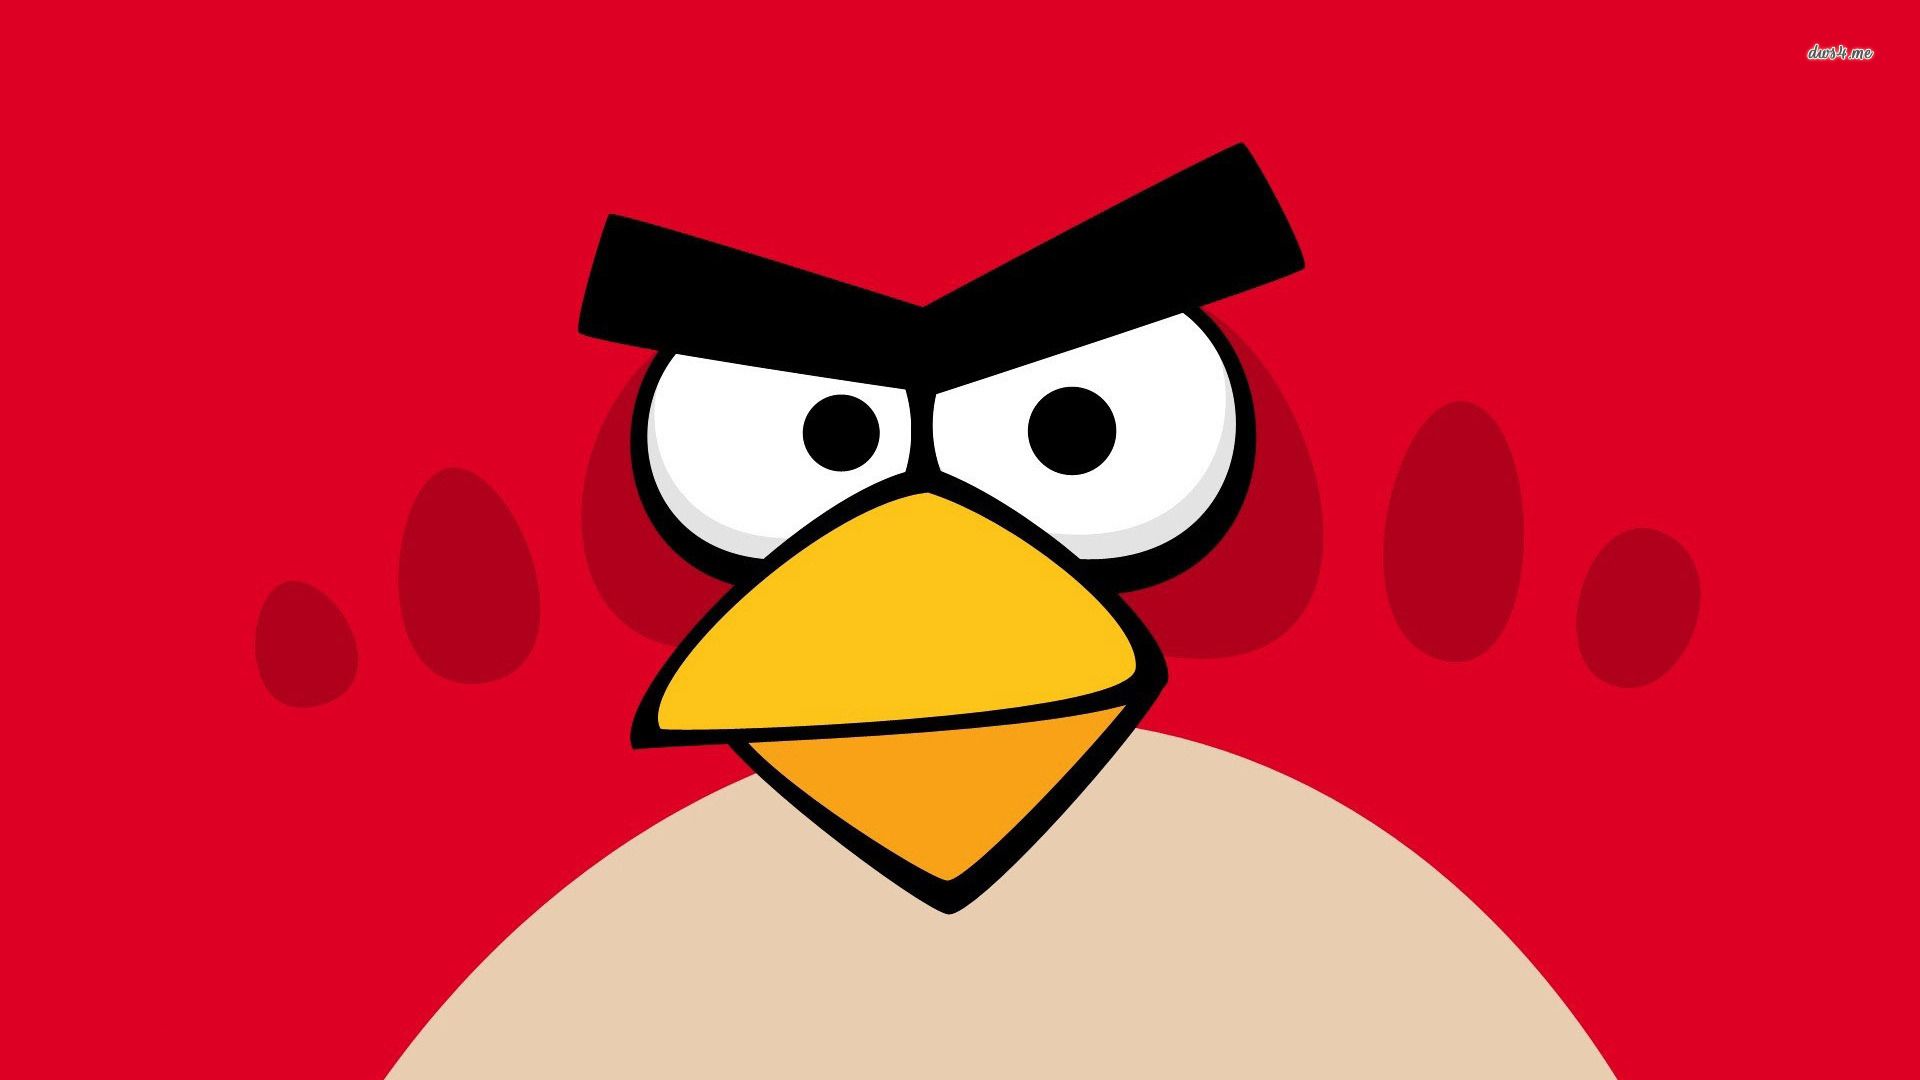 28 angry birds Wallpaper backgrounds - Desktop Backgrounds